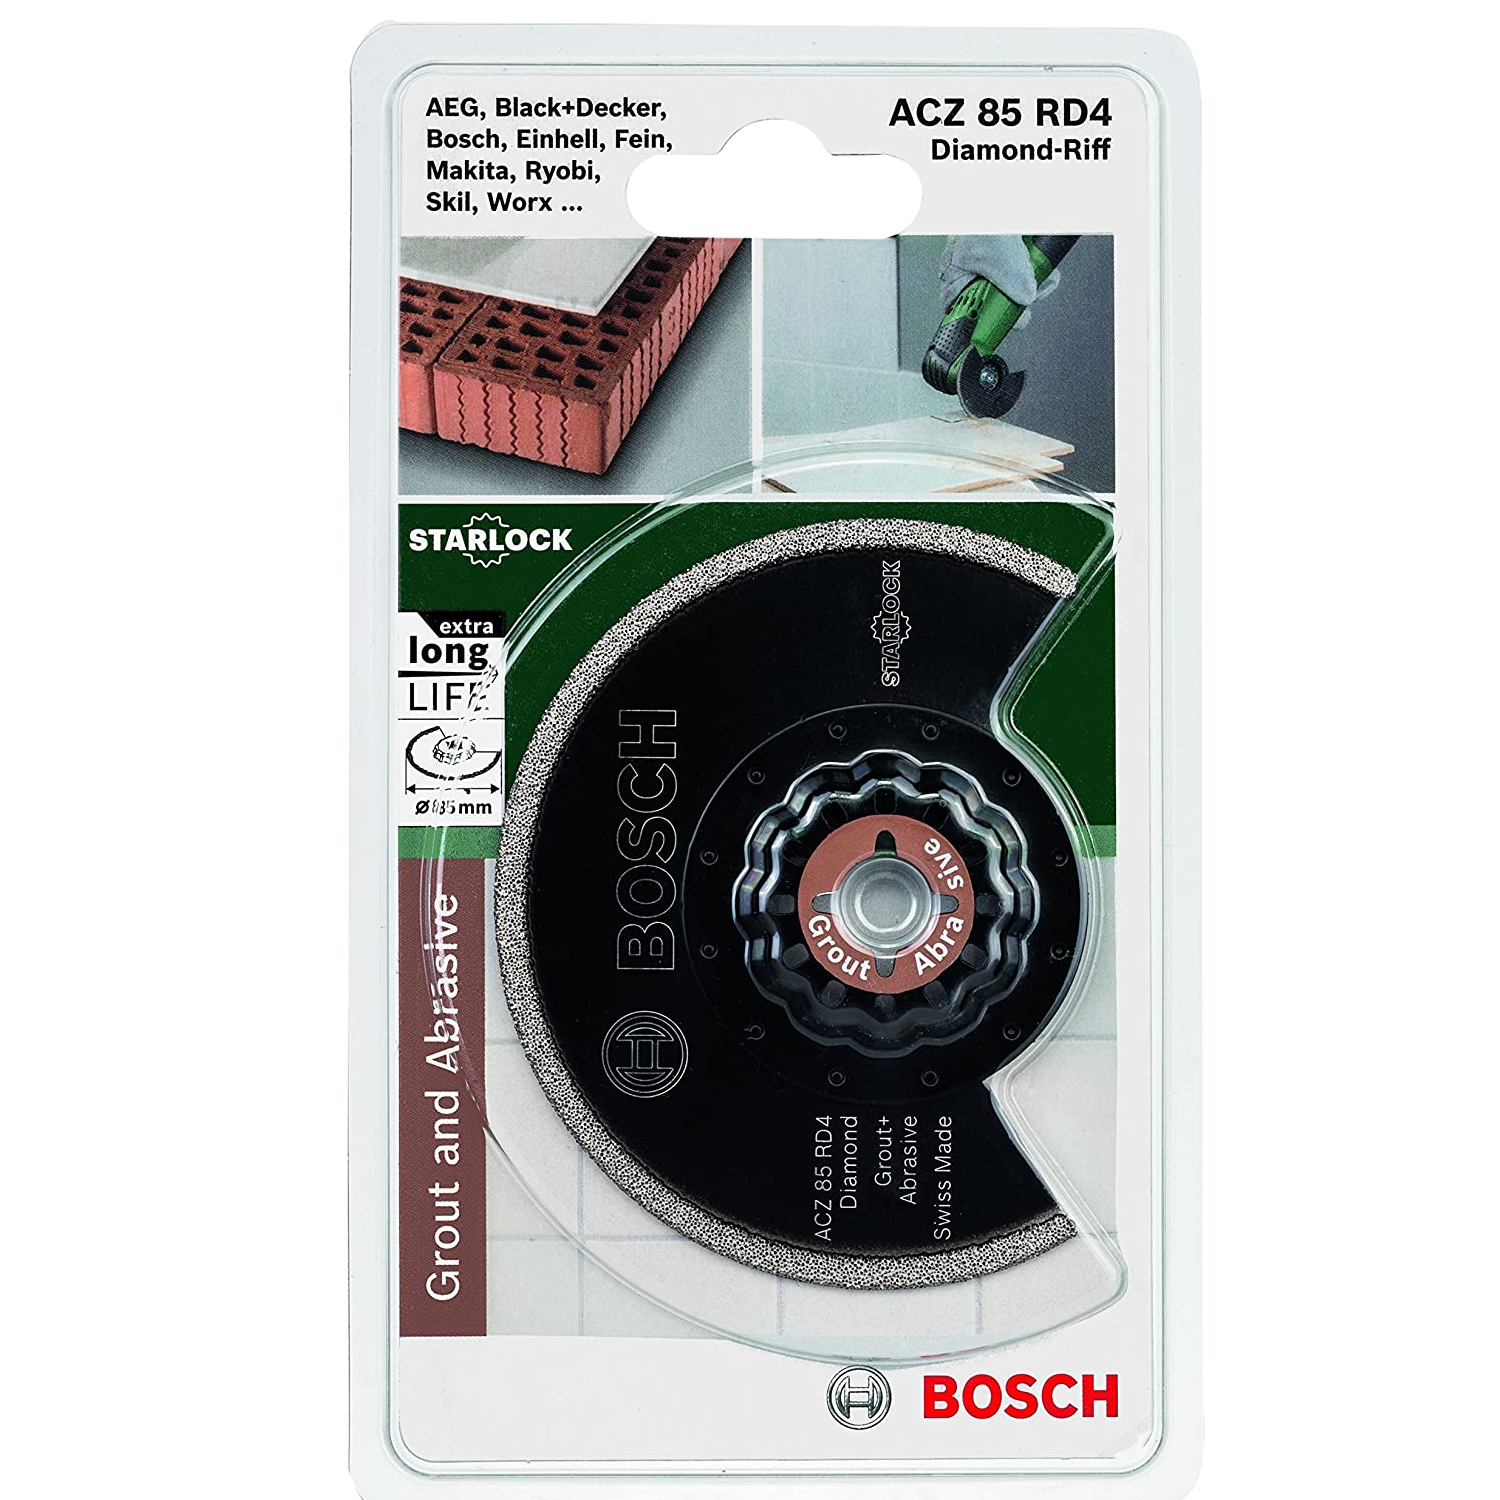 Bosch Starlock ACZ 85 RD4 Diamond-RIFF Segment Saw Blade 2609256972 Power Tool Services